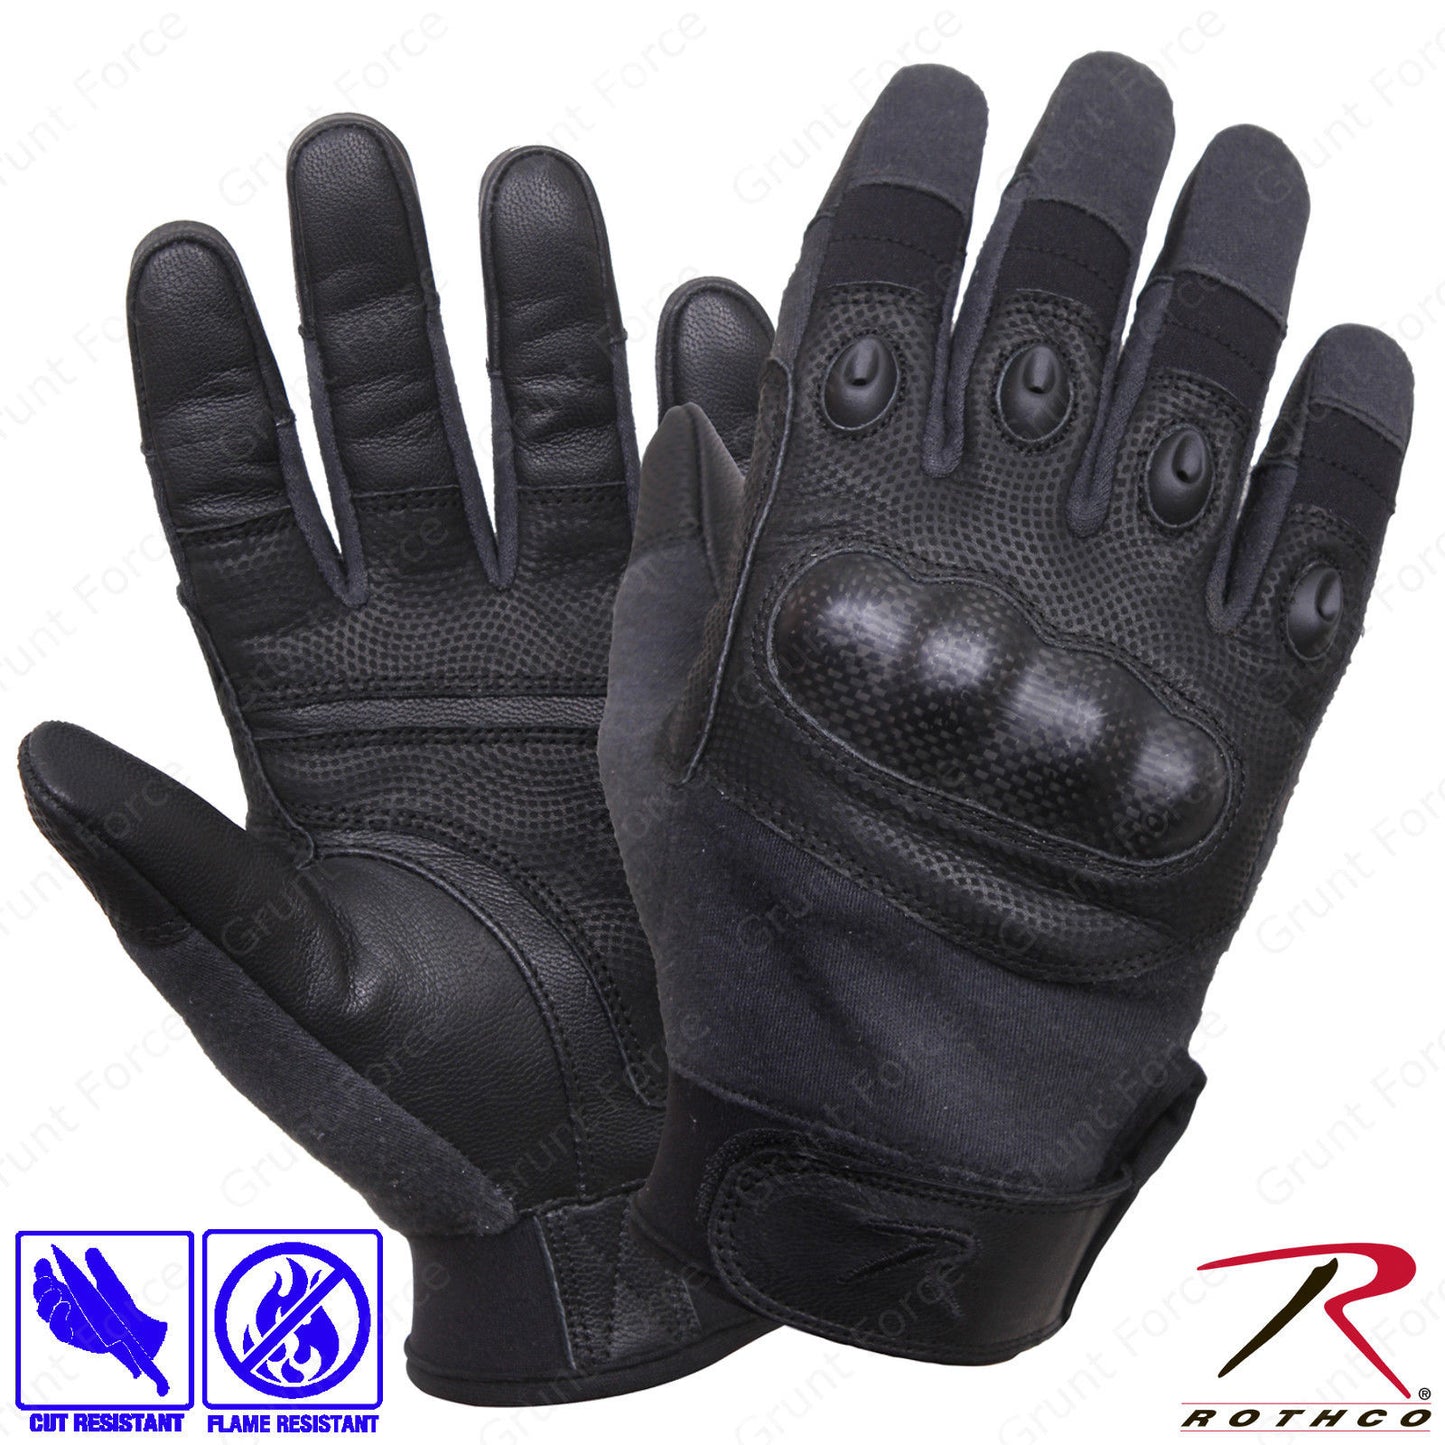 Rothco Carbon Fiber Hard Knuckle Cut & Fire Resistant Black Tactical Gloves